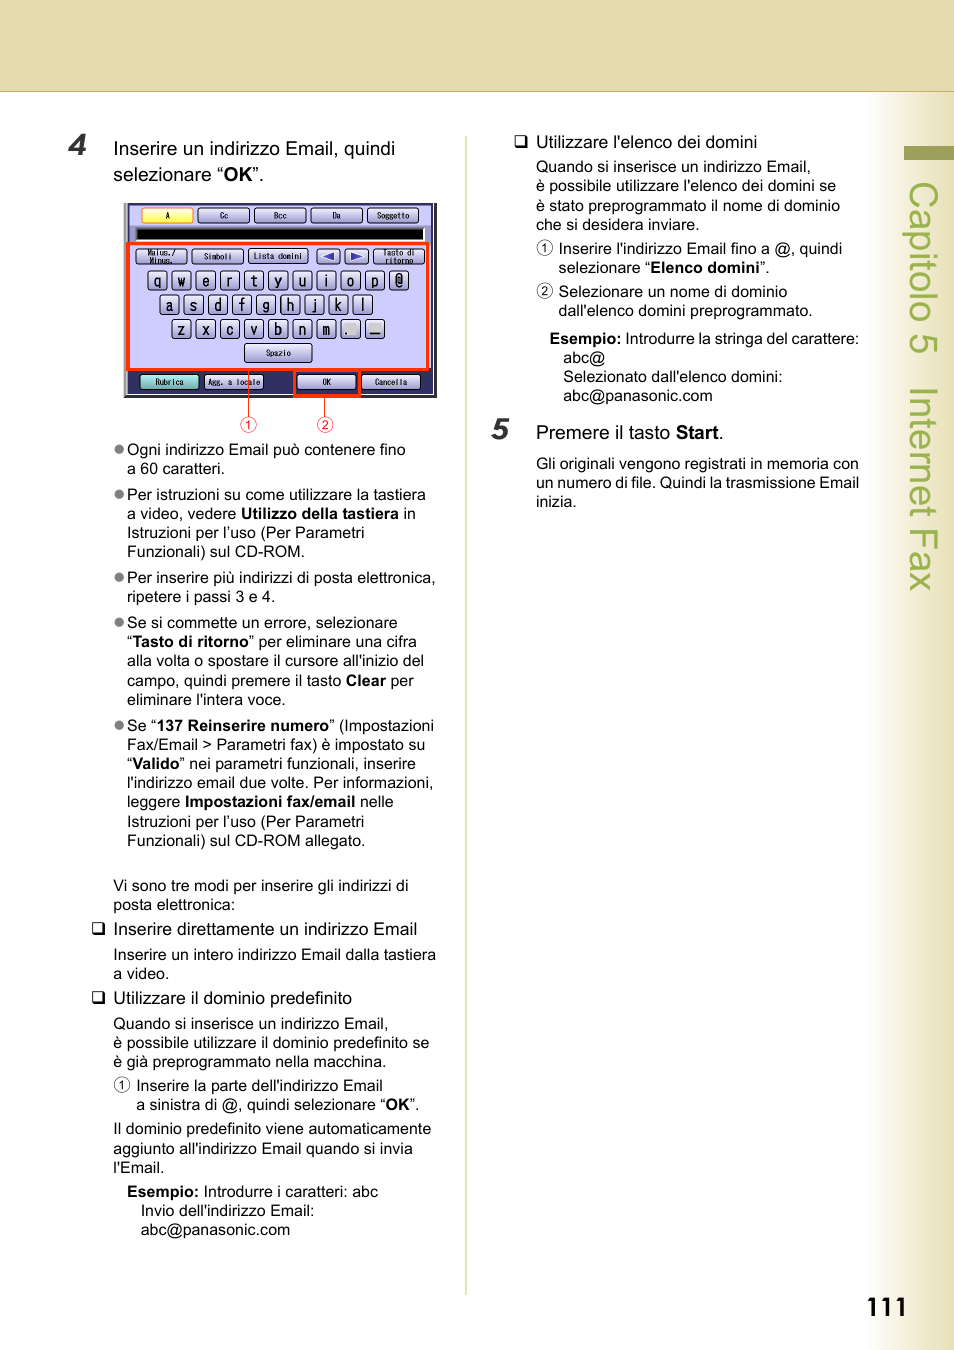 Capitolo 5 internet fax | Panasonic DPC306 Manuale d'uso | Pagina 111 / 226